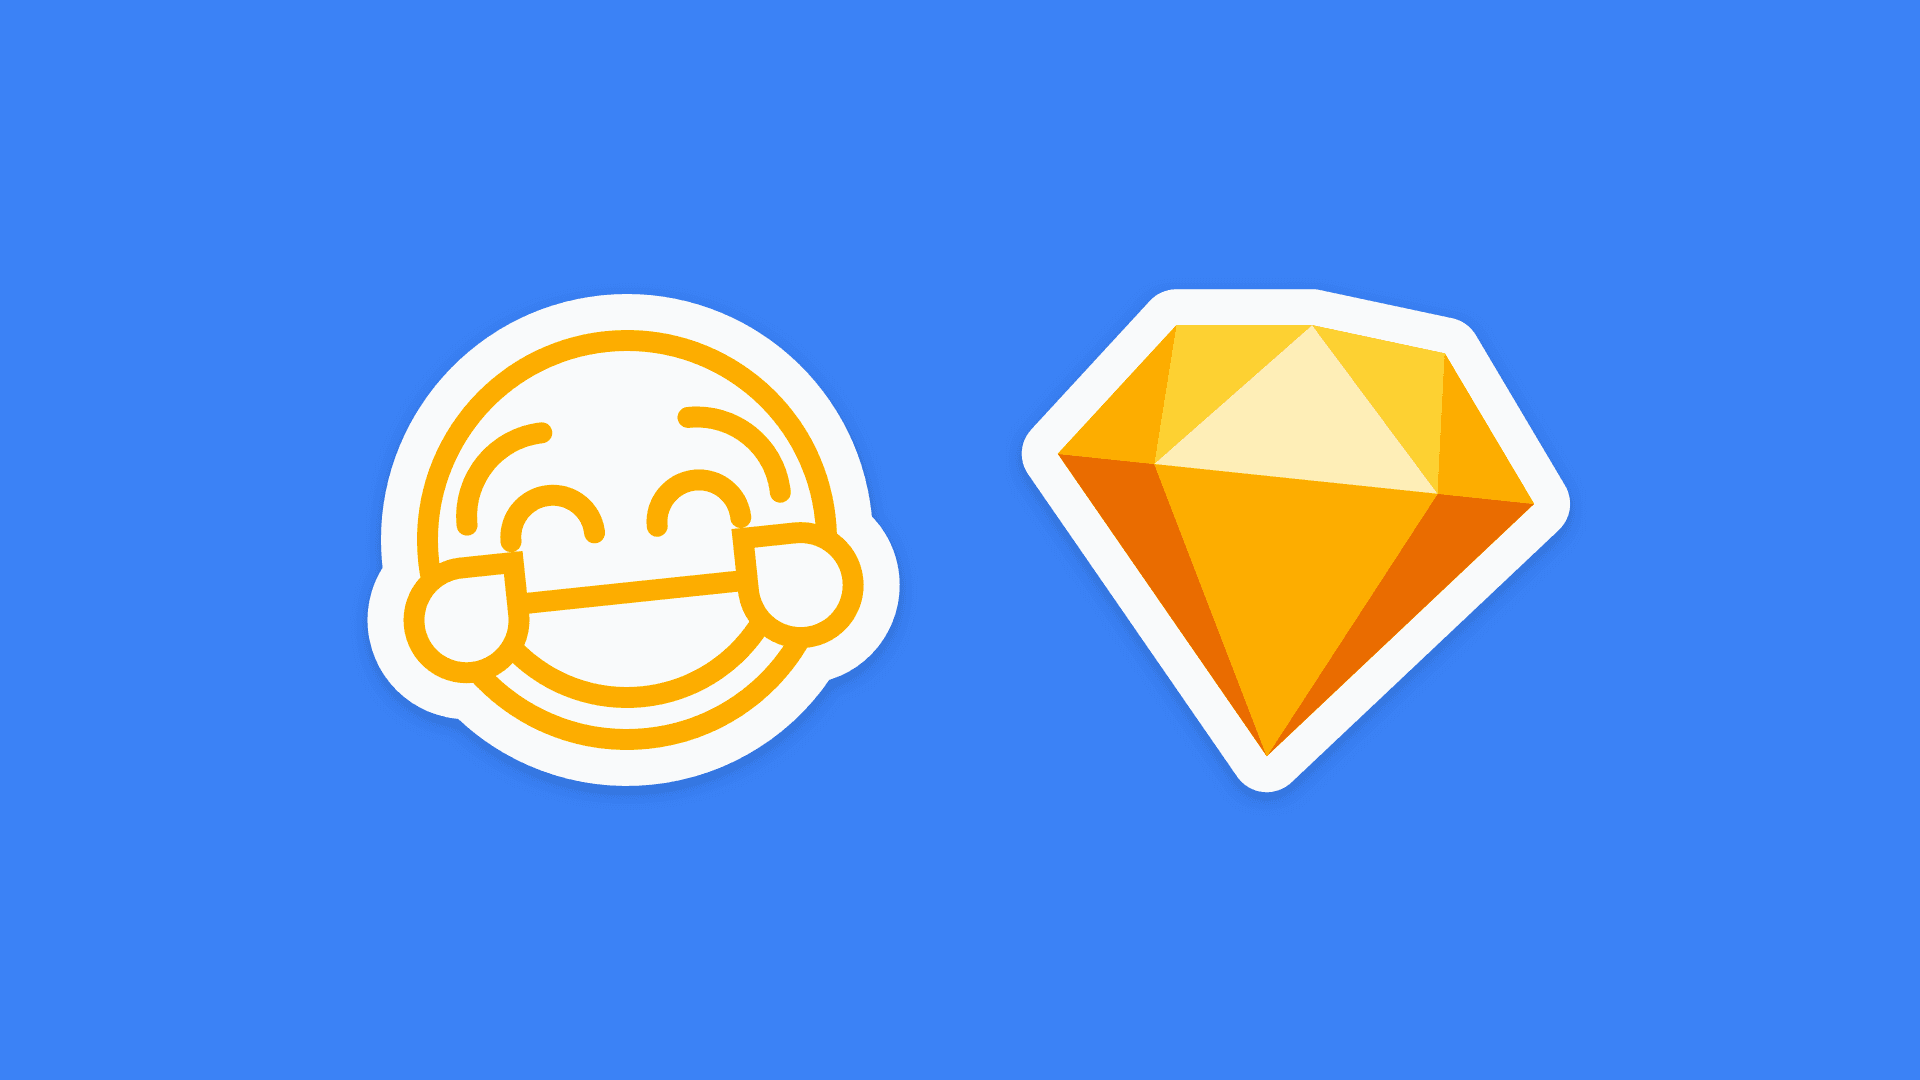 A joyful emoji and the Sketch logo